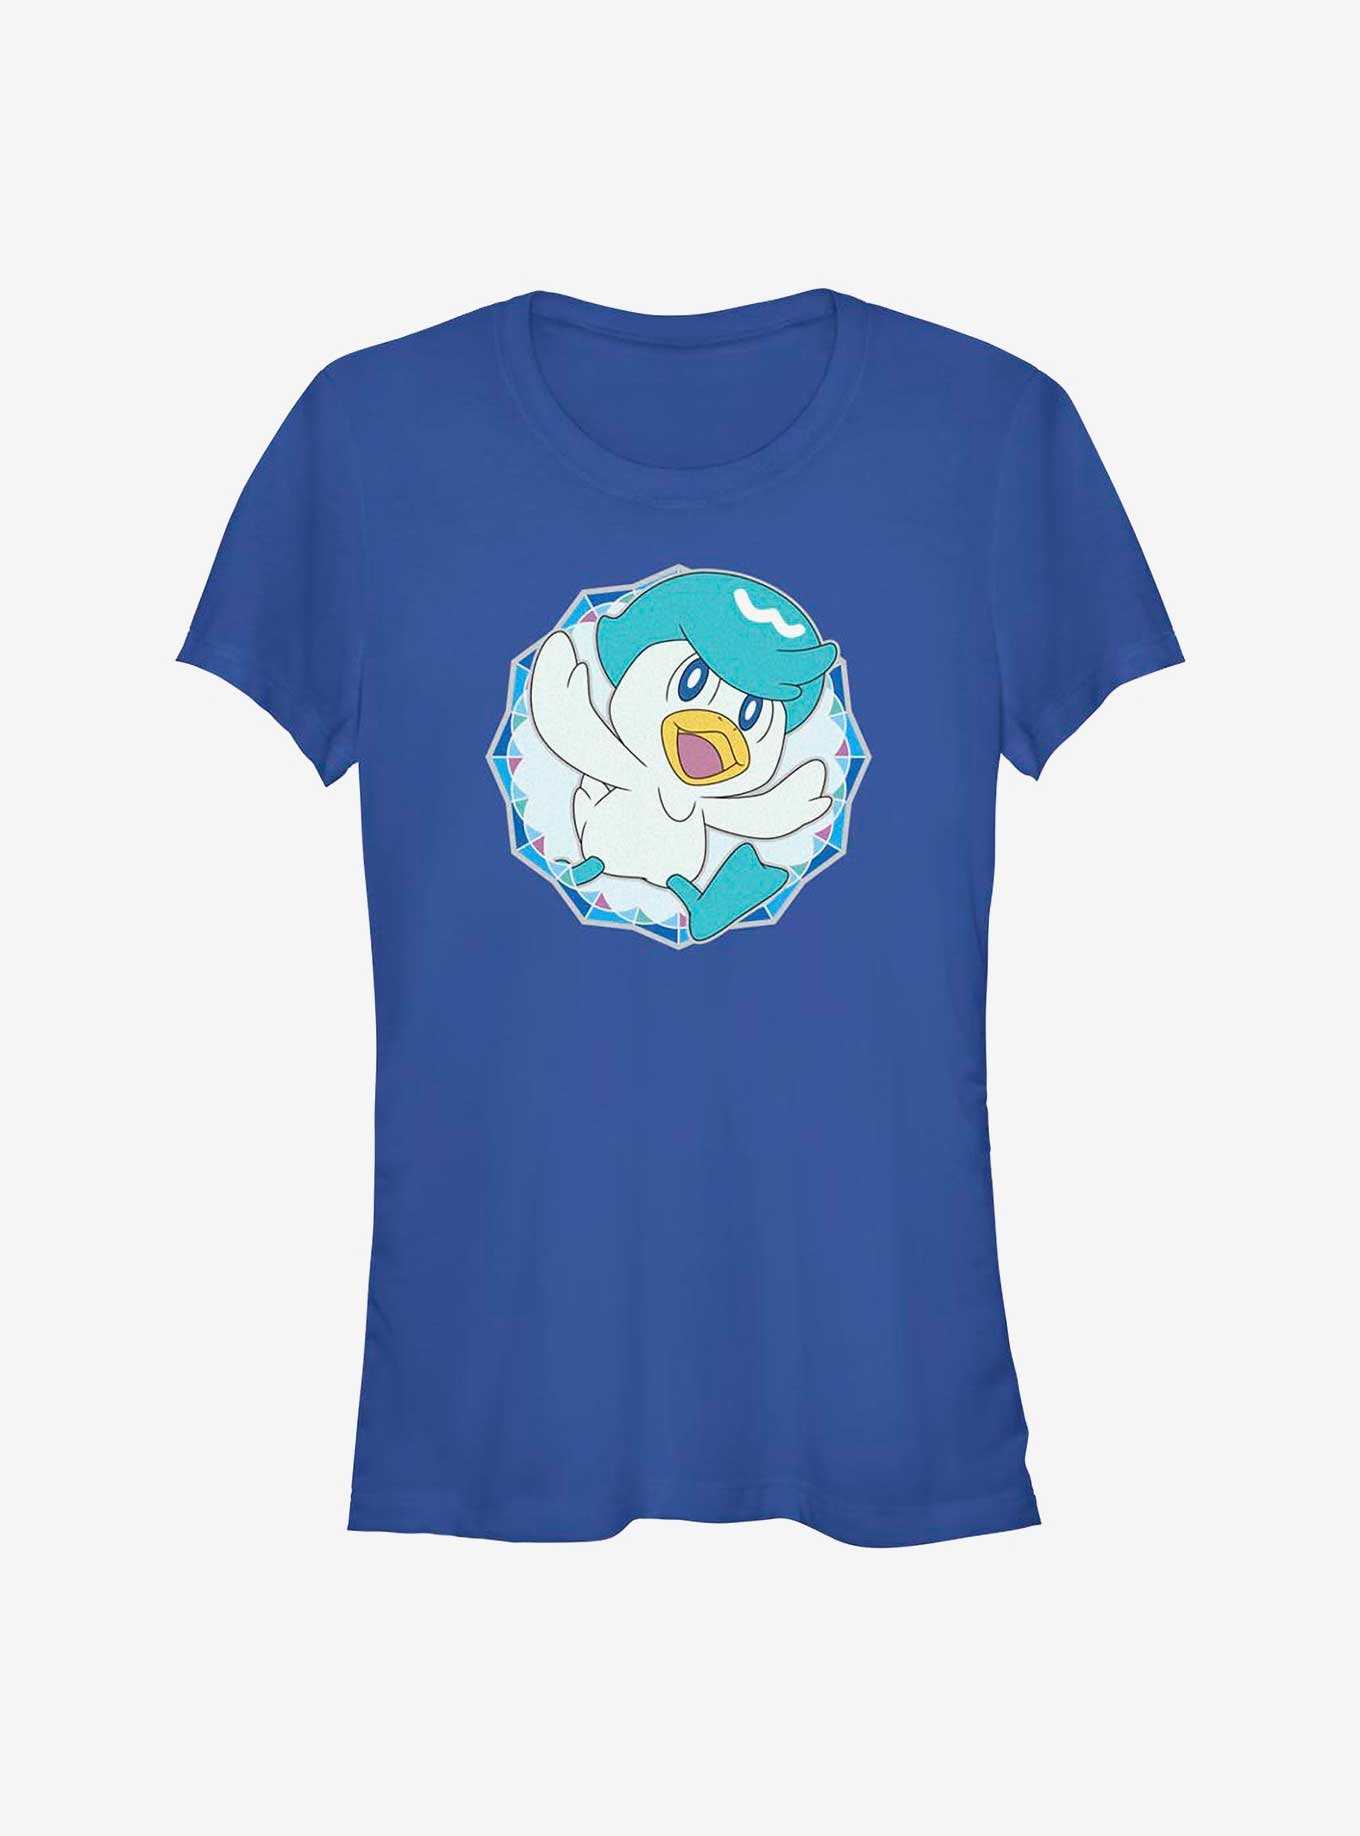 Pokemon Quaxly Sparkle Girls T-Shirt, , hi-res